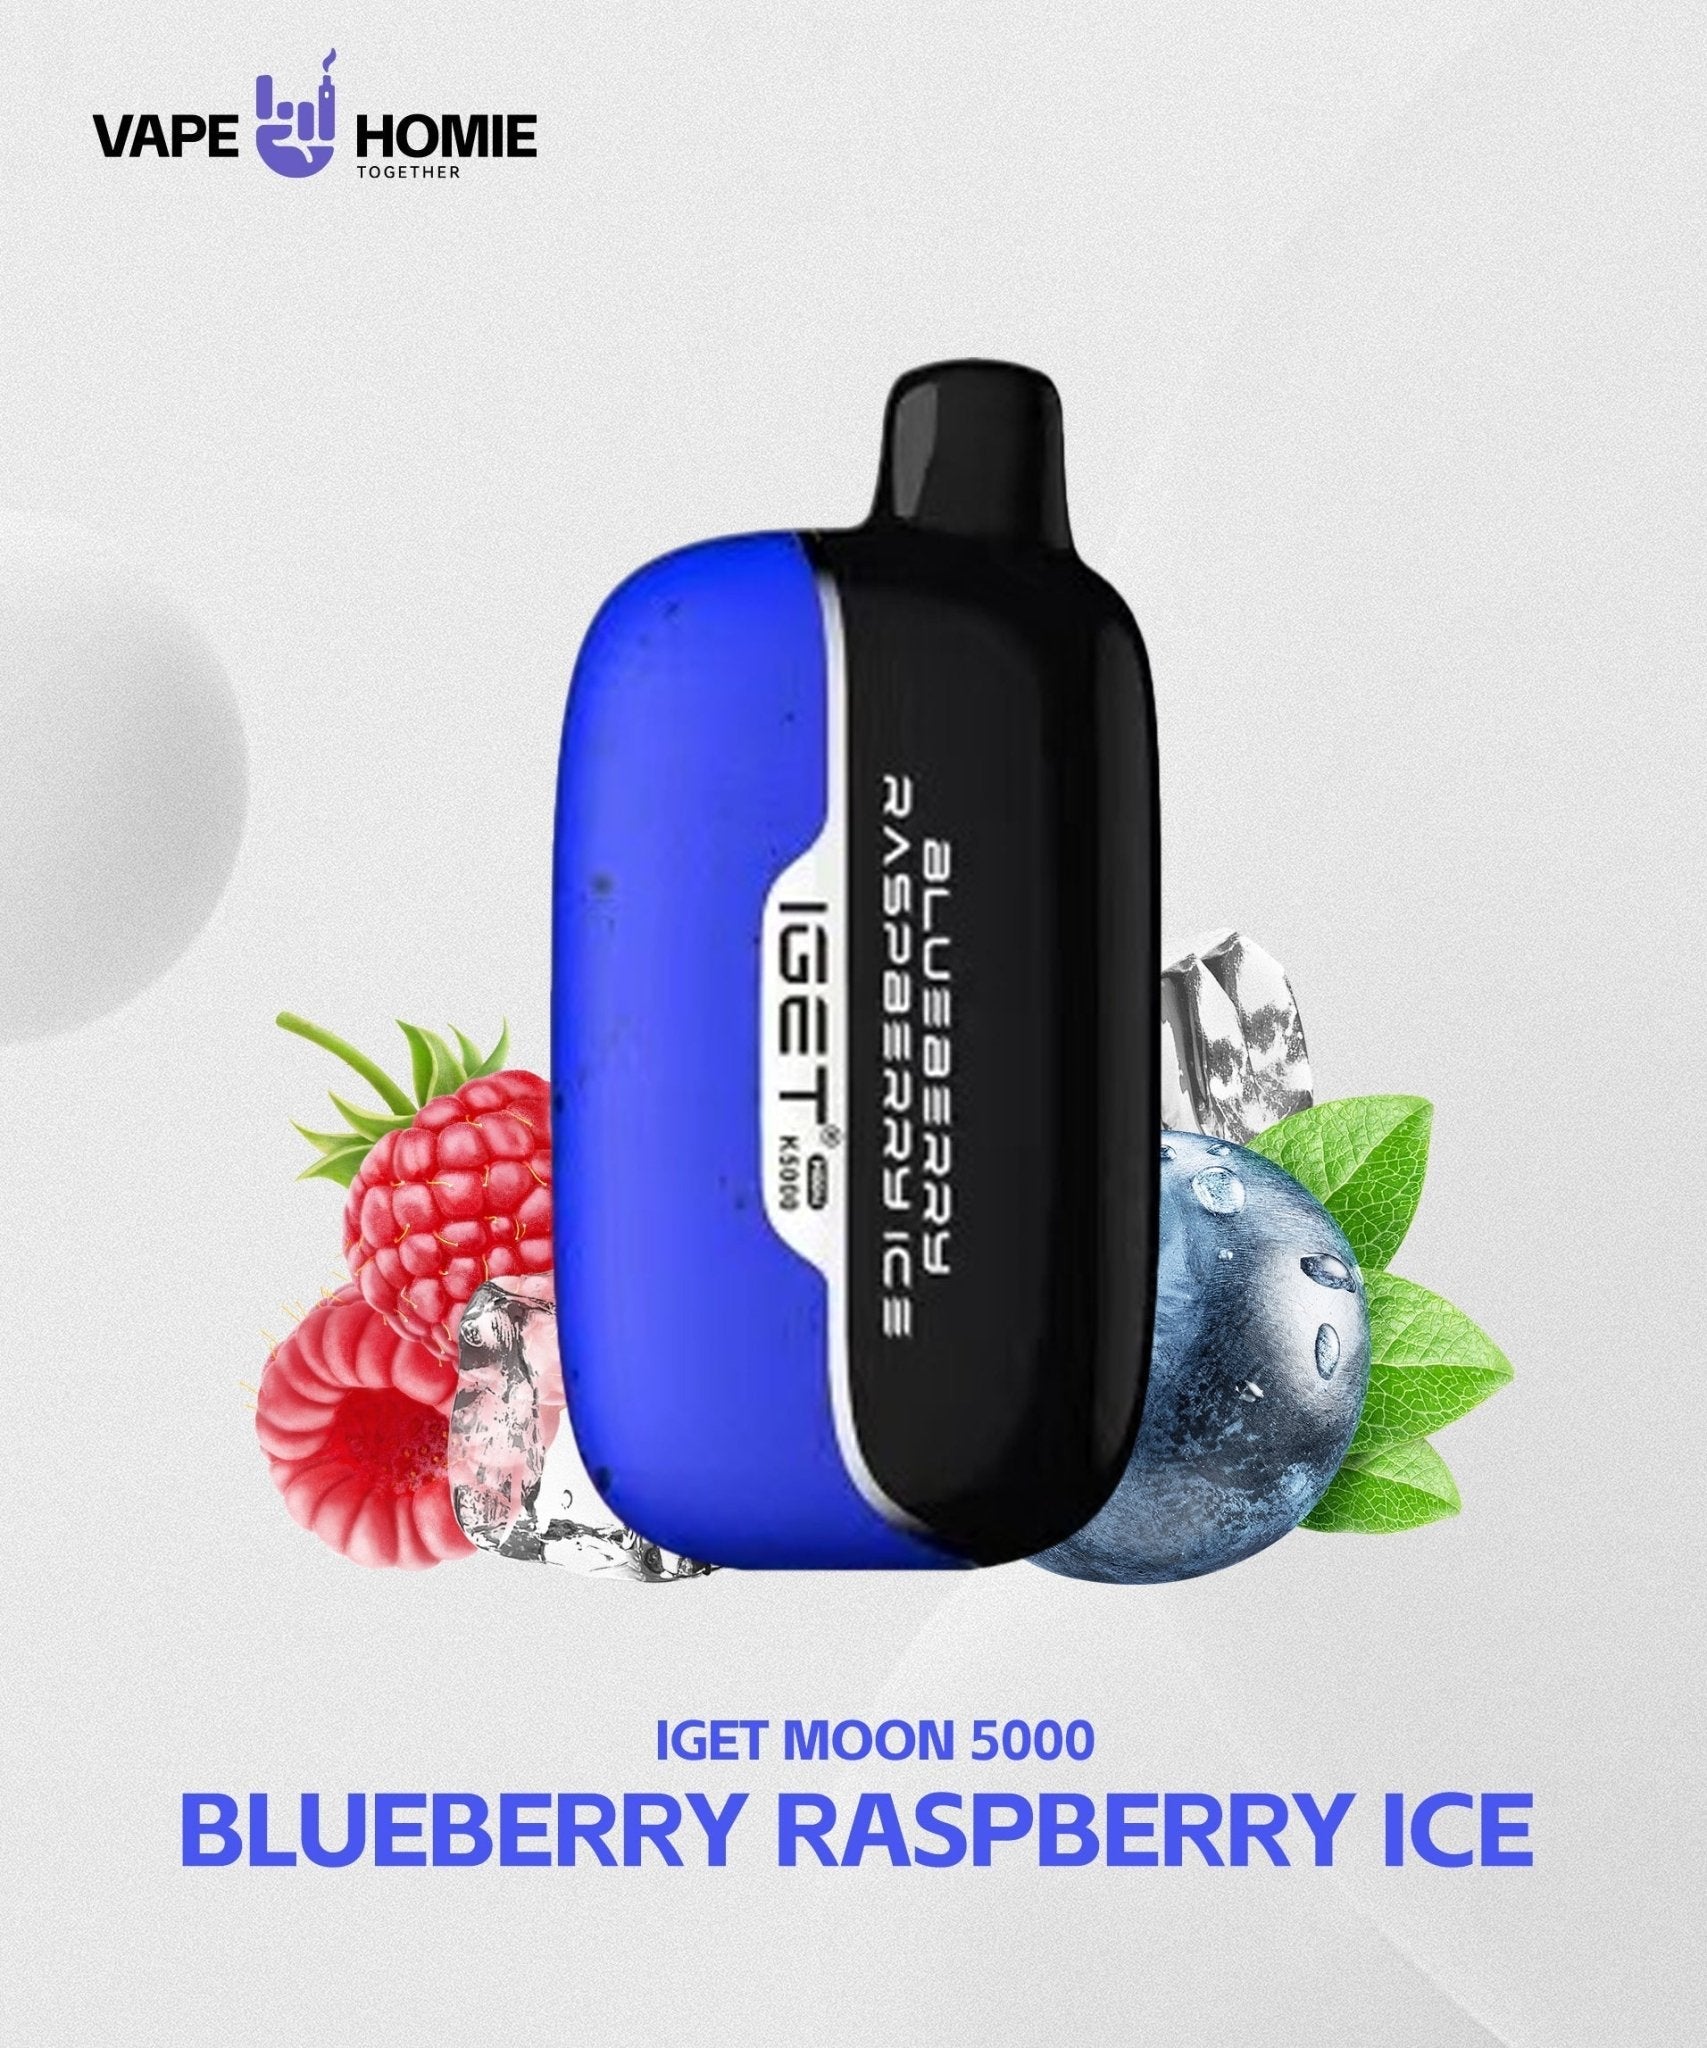 IGET MOON K5000 - BLUEBERY RASPBERRY ICE - HAPPYTRAIL